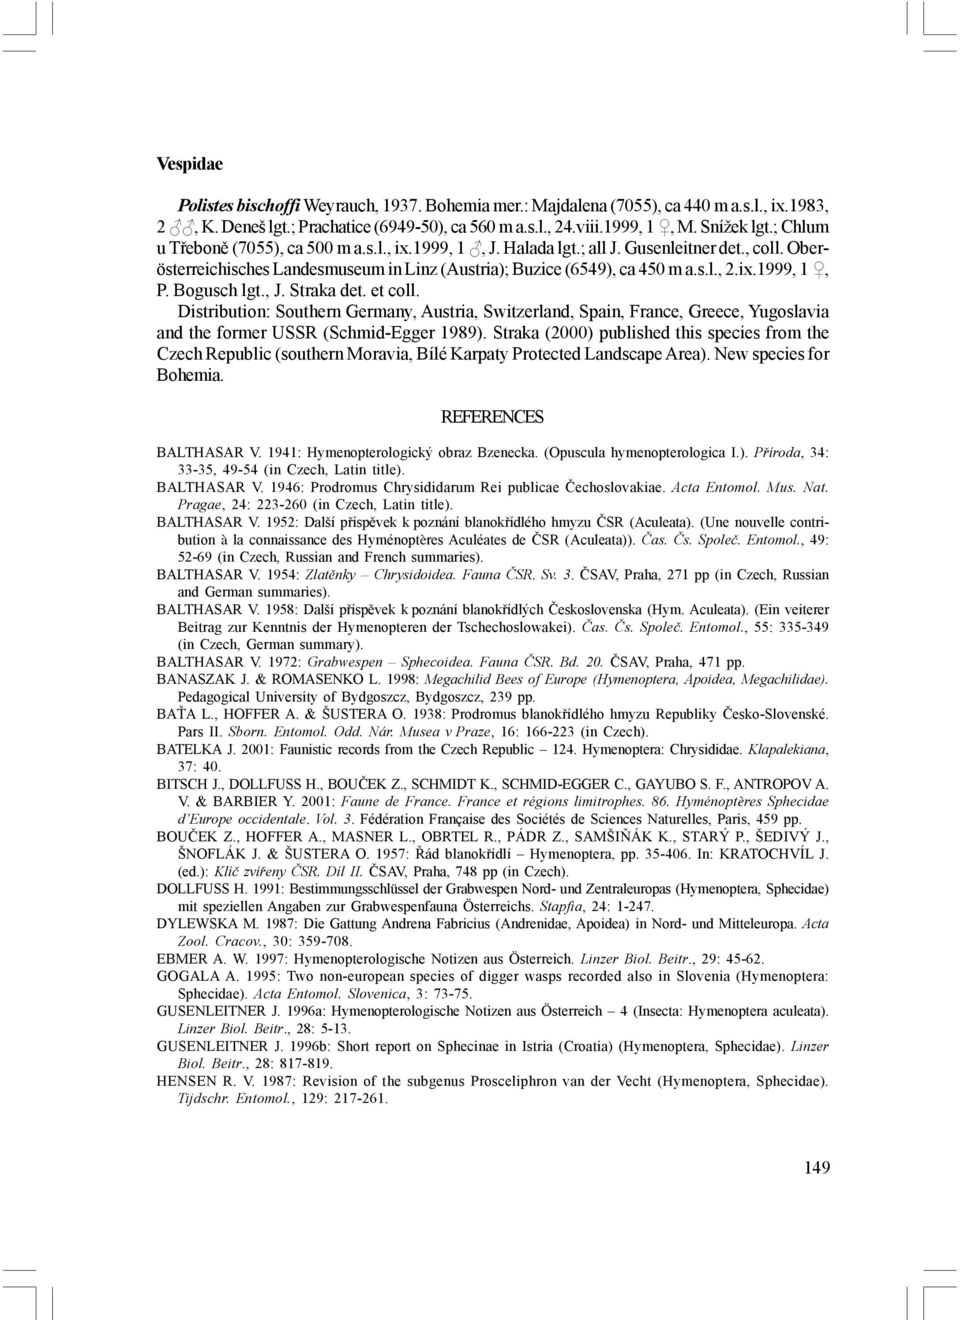 Bogusch lgt., J. Straka det. et coll. Distribution: Southern Germany, Austria, Switzerland, Spain, France, Greece, Yugoslavia and the former USSR (Schmid-Egger 1989).